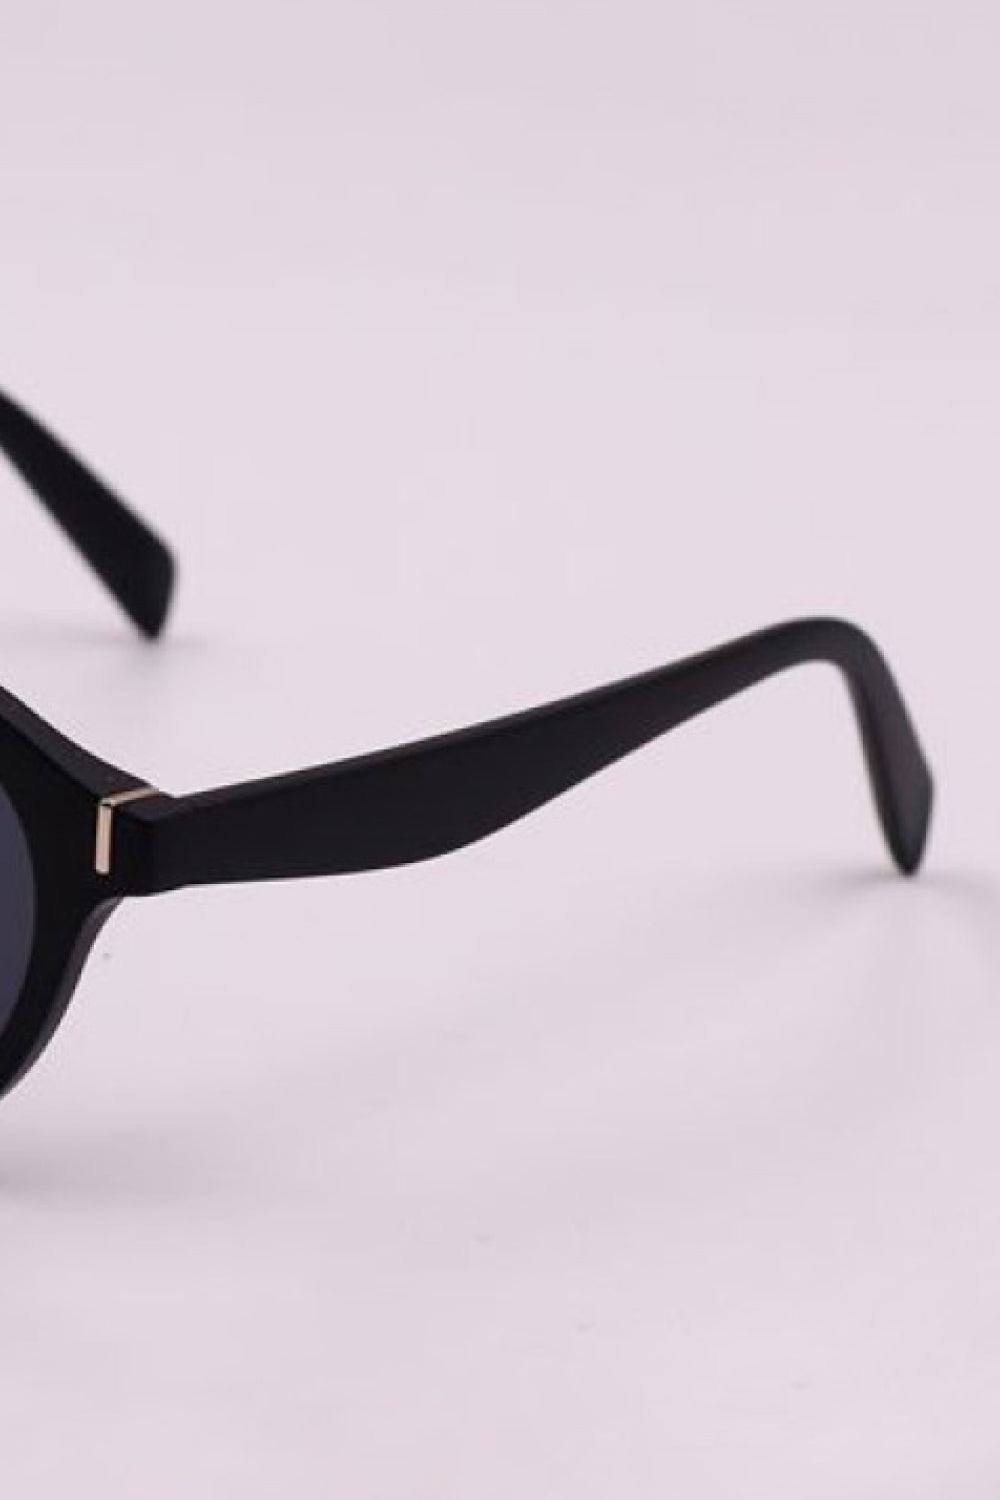 Light Gray 3-Piece Round Polycarbonate Full Rim Sunglasses Sentient Beauty Fashions Apparel &amp; Accessories